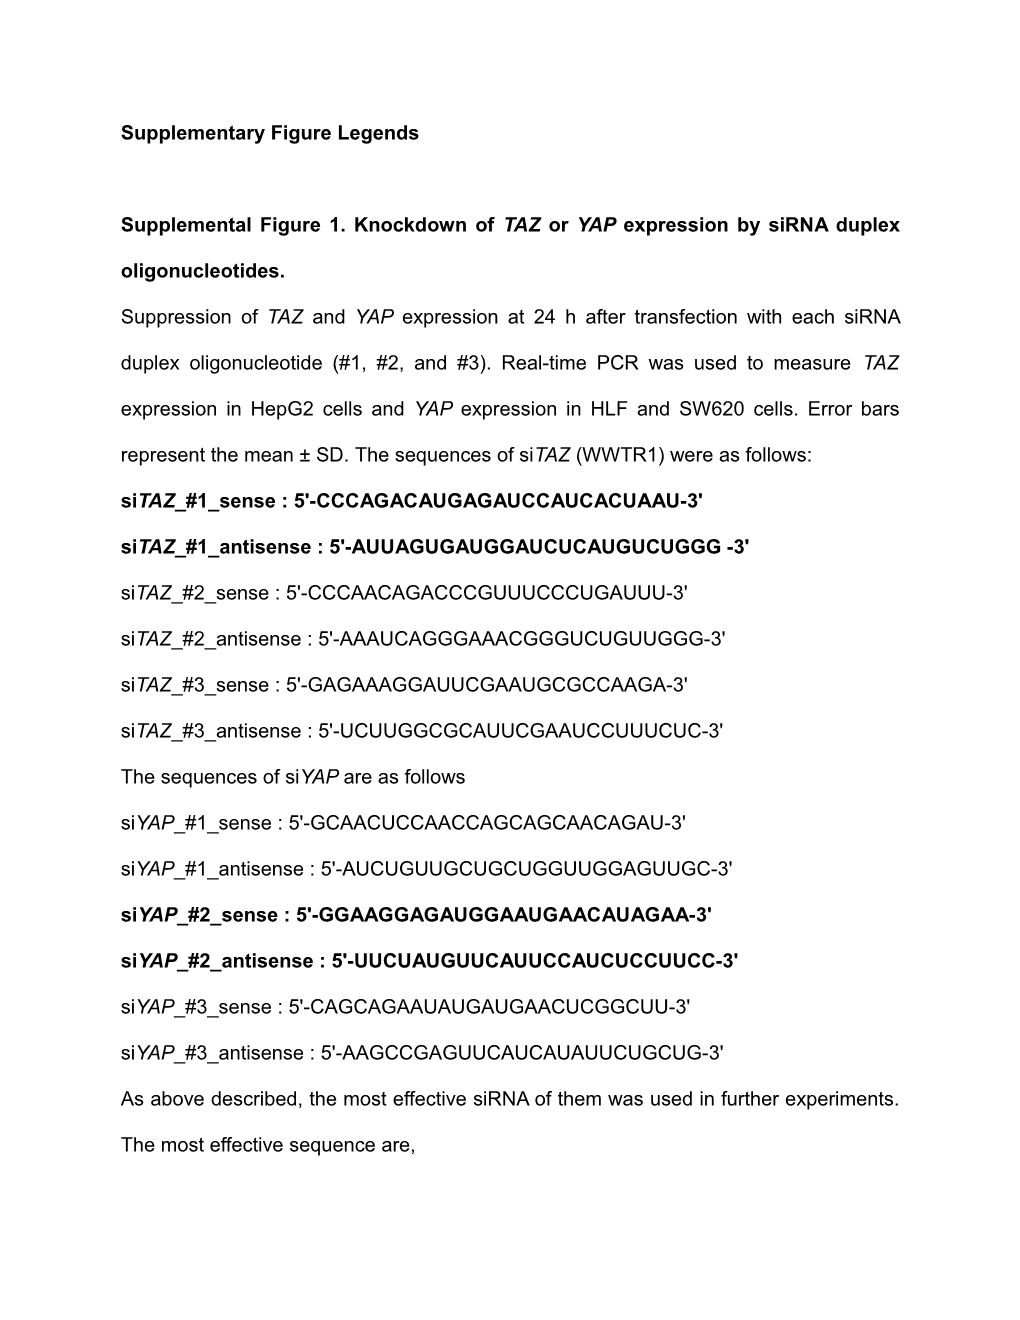 Supplemental Figure 1. Knockdown of TAZ Or YAP Expression by Sirna Duplex Oligonucleotides